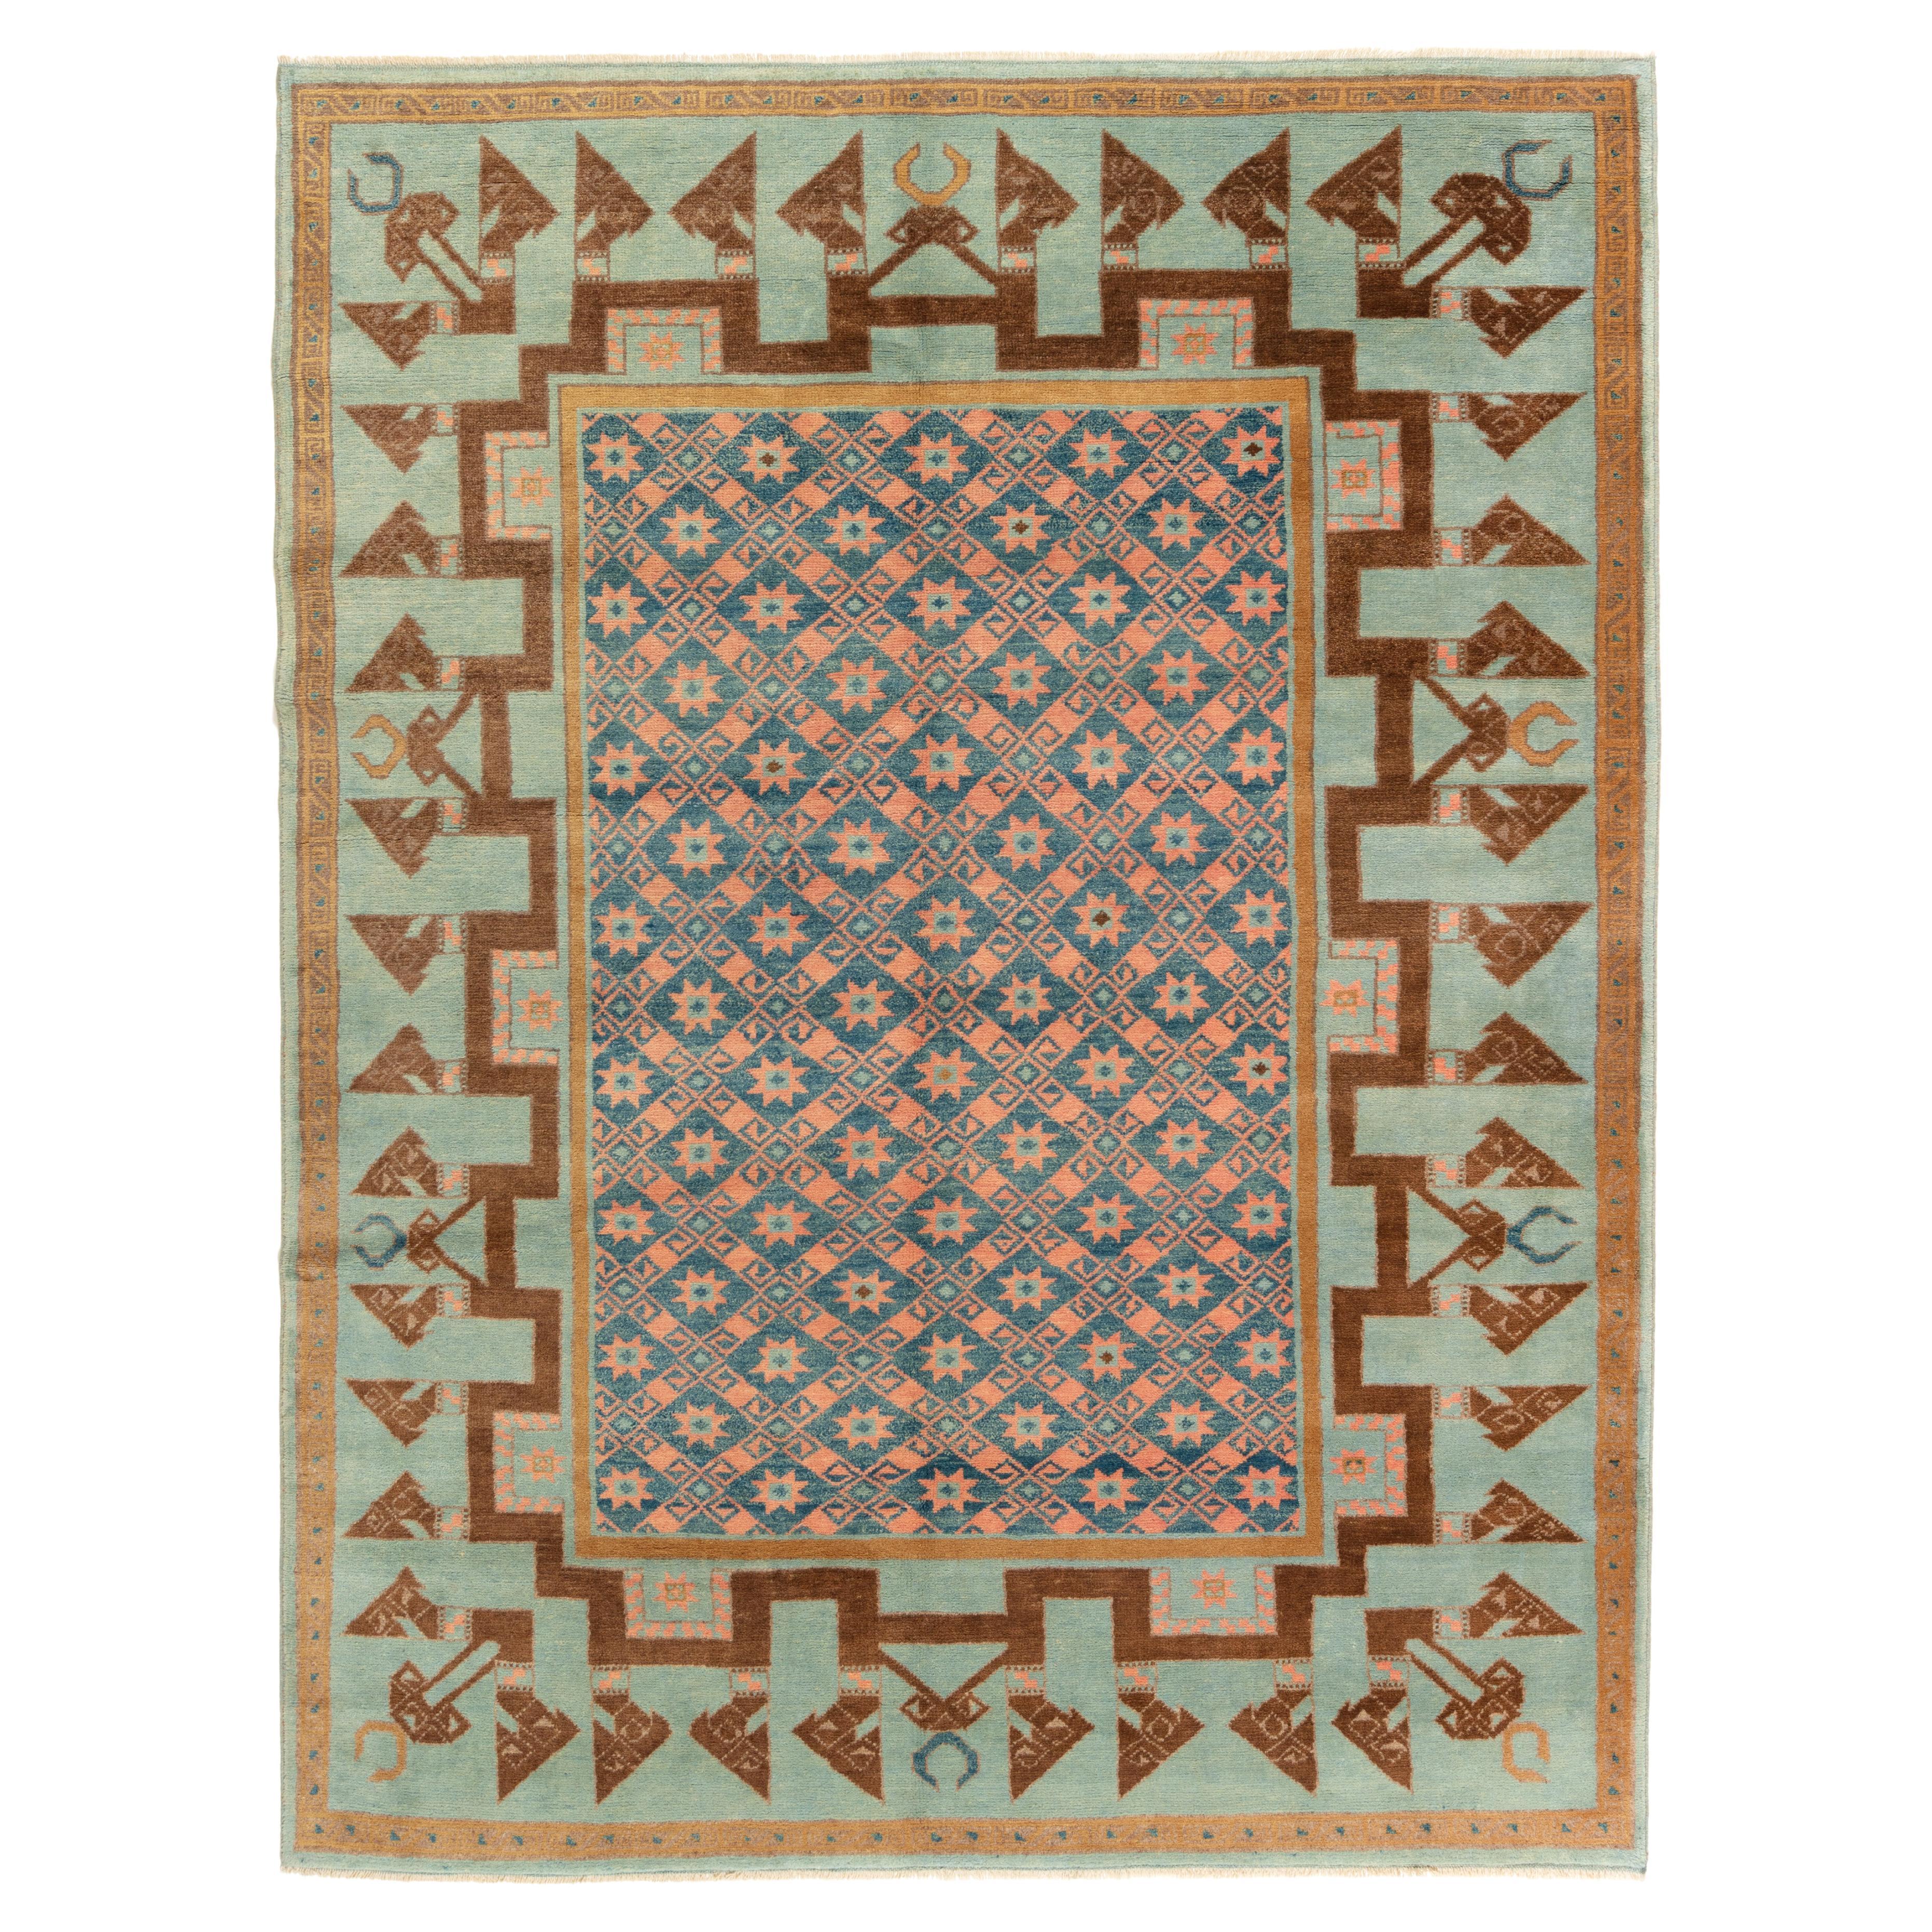 Ararat Rugs the Esrefoglu Mosque Stars in Lattice Carpet Anatolian Natural Dyed